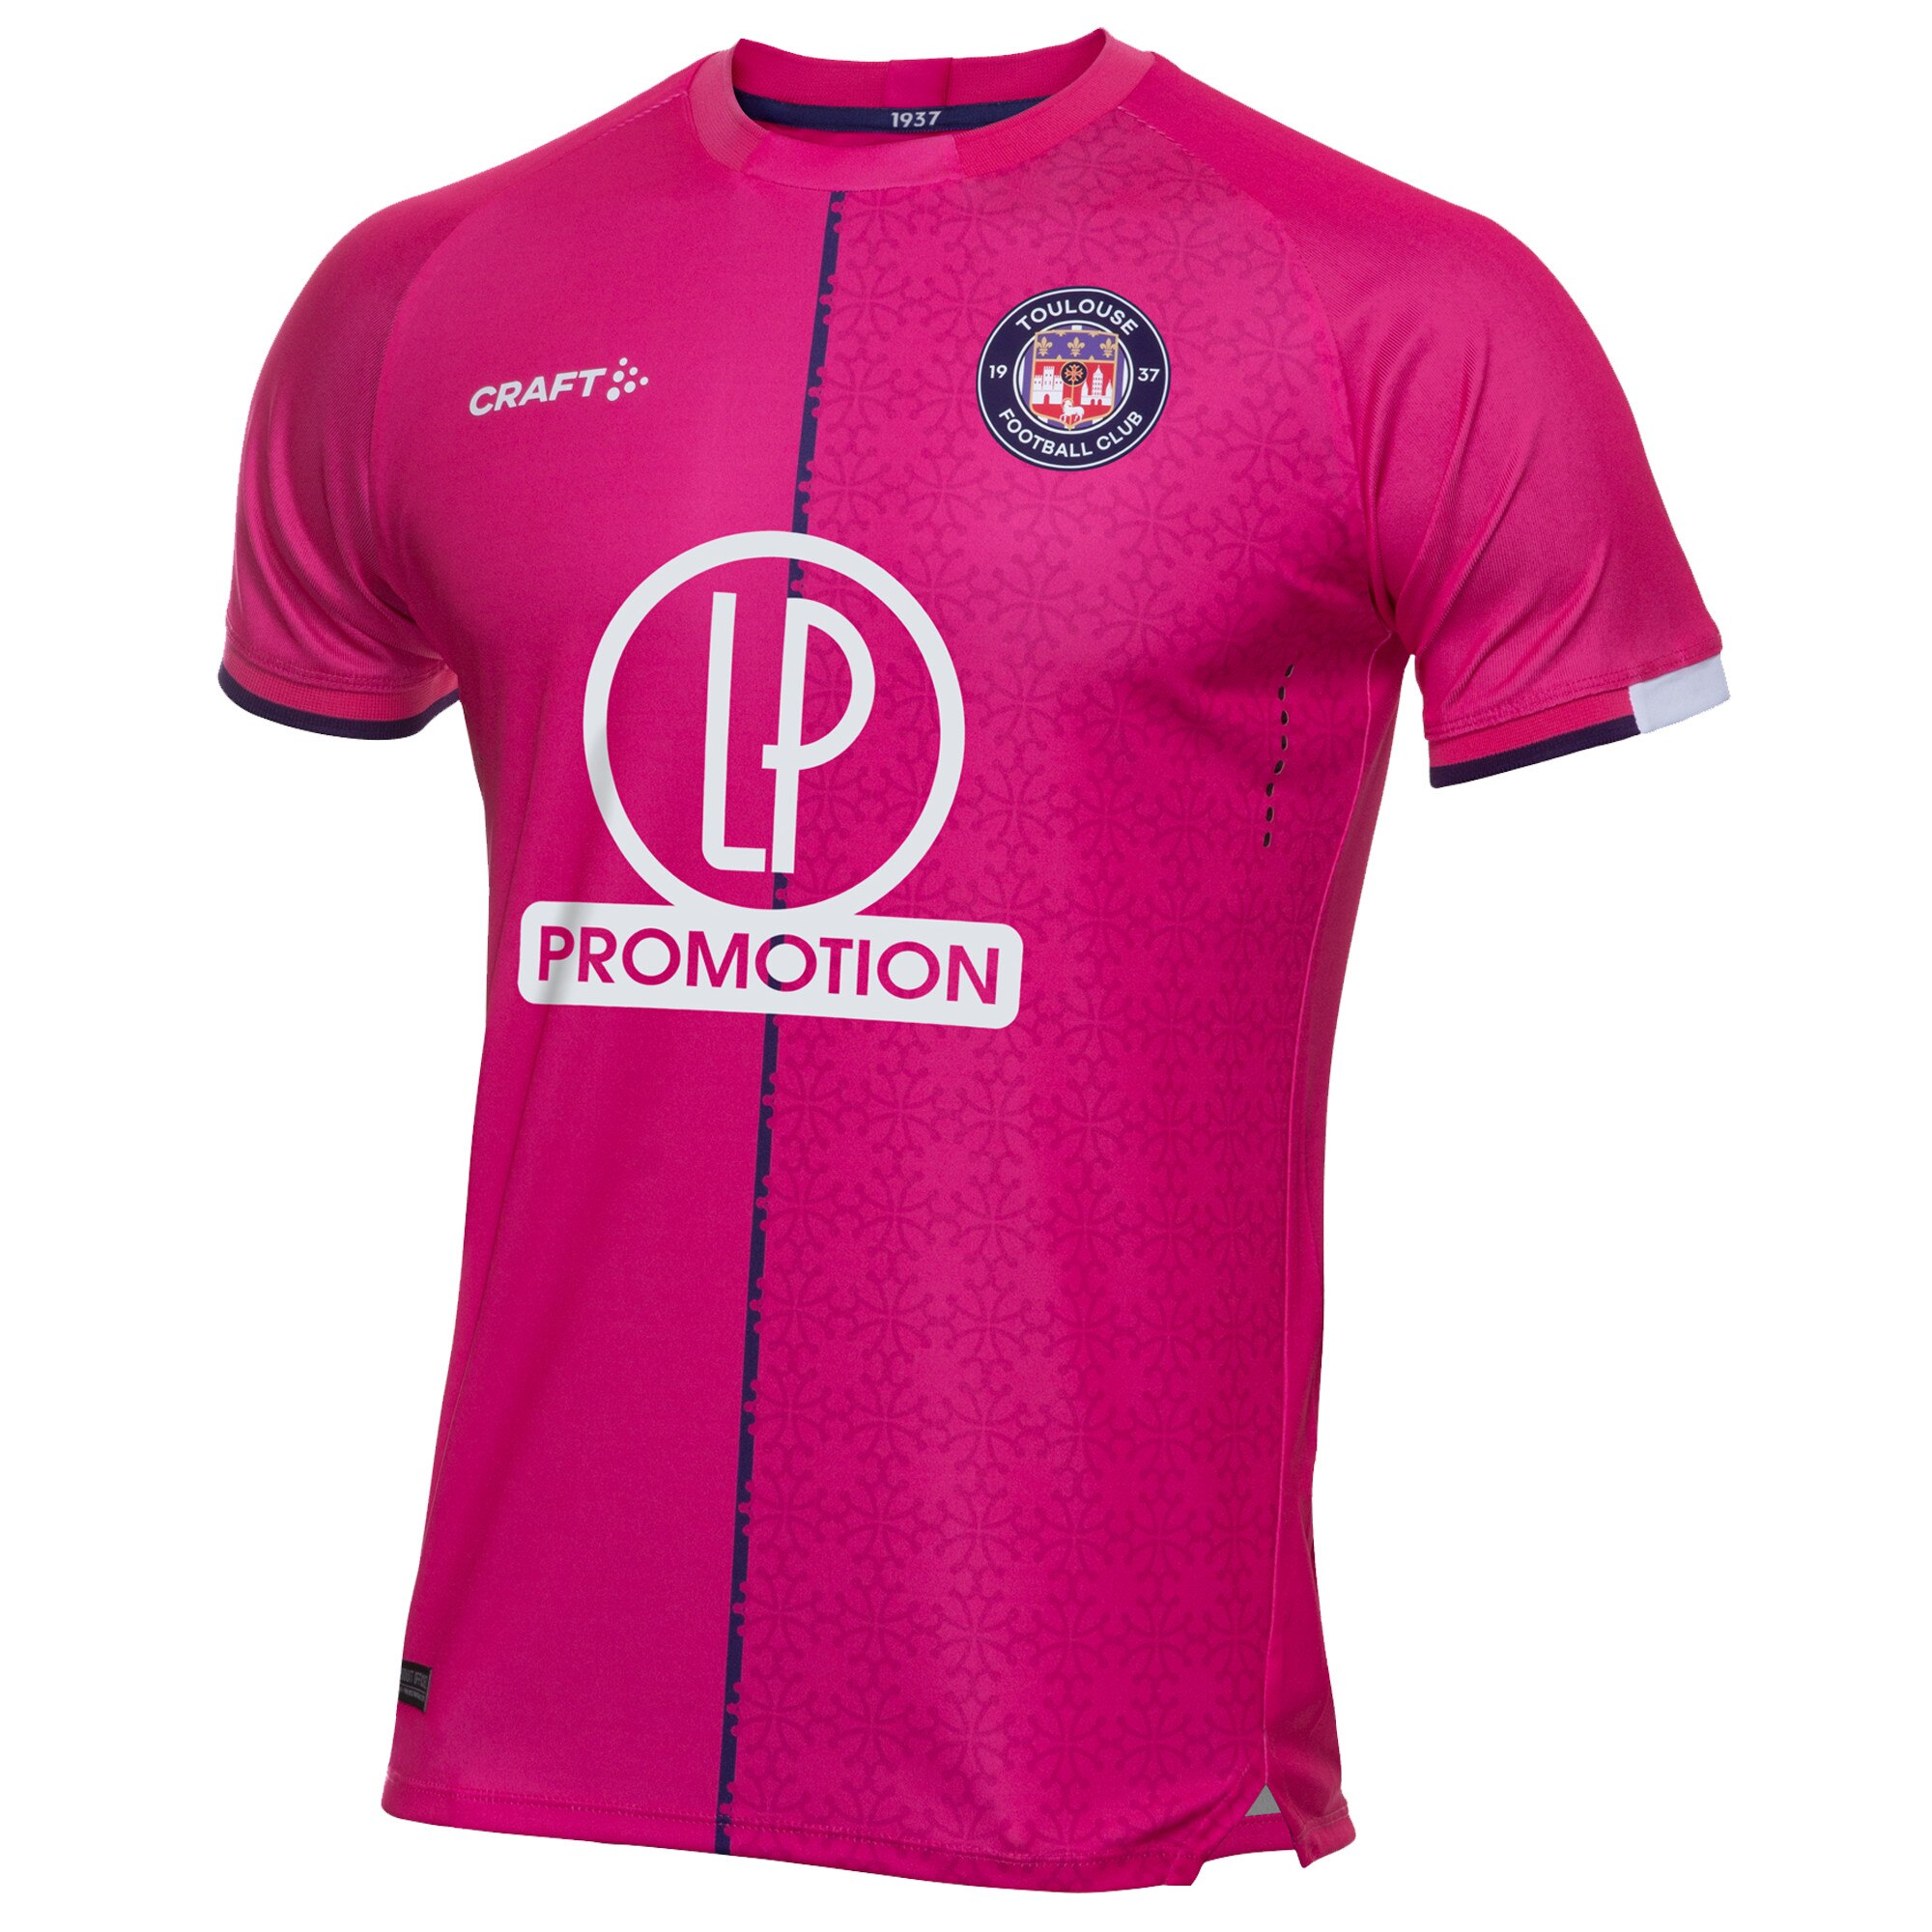 Toulouse Football Club Away Pro Shirt 2021-22 with Ado 7 printing